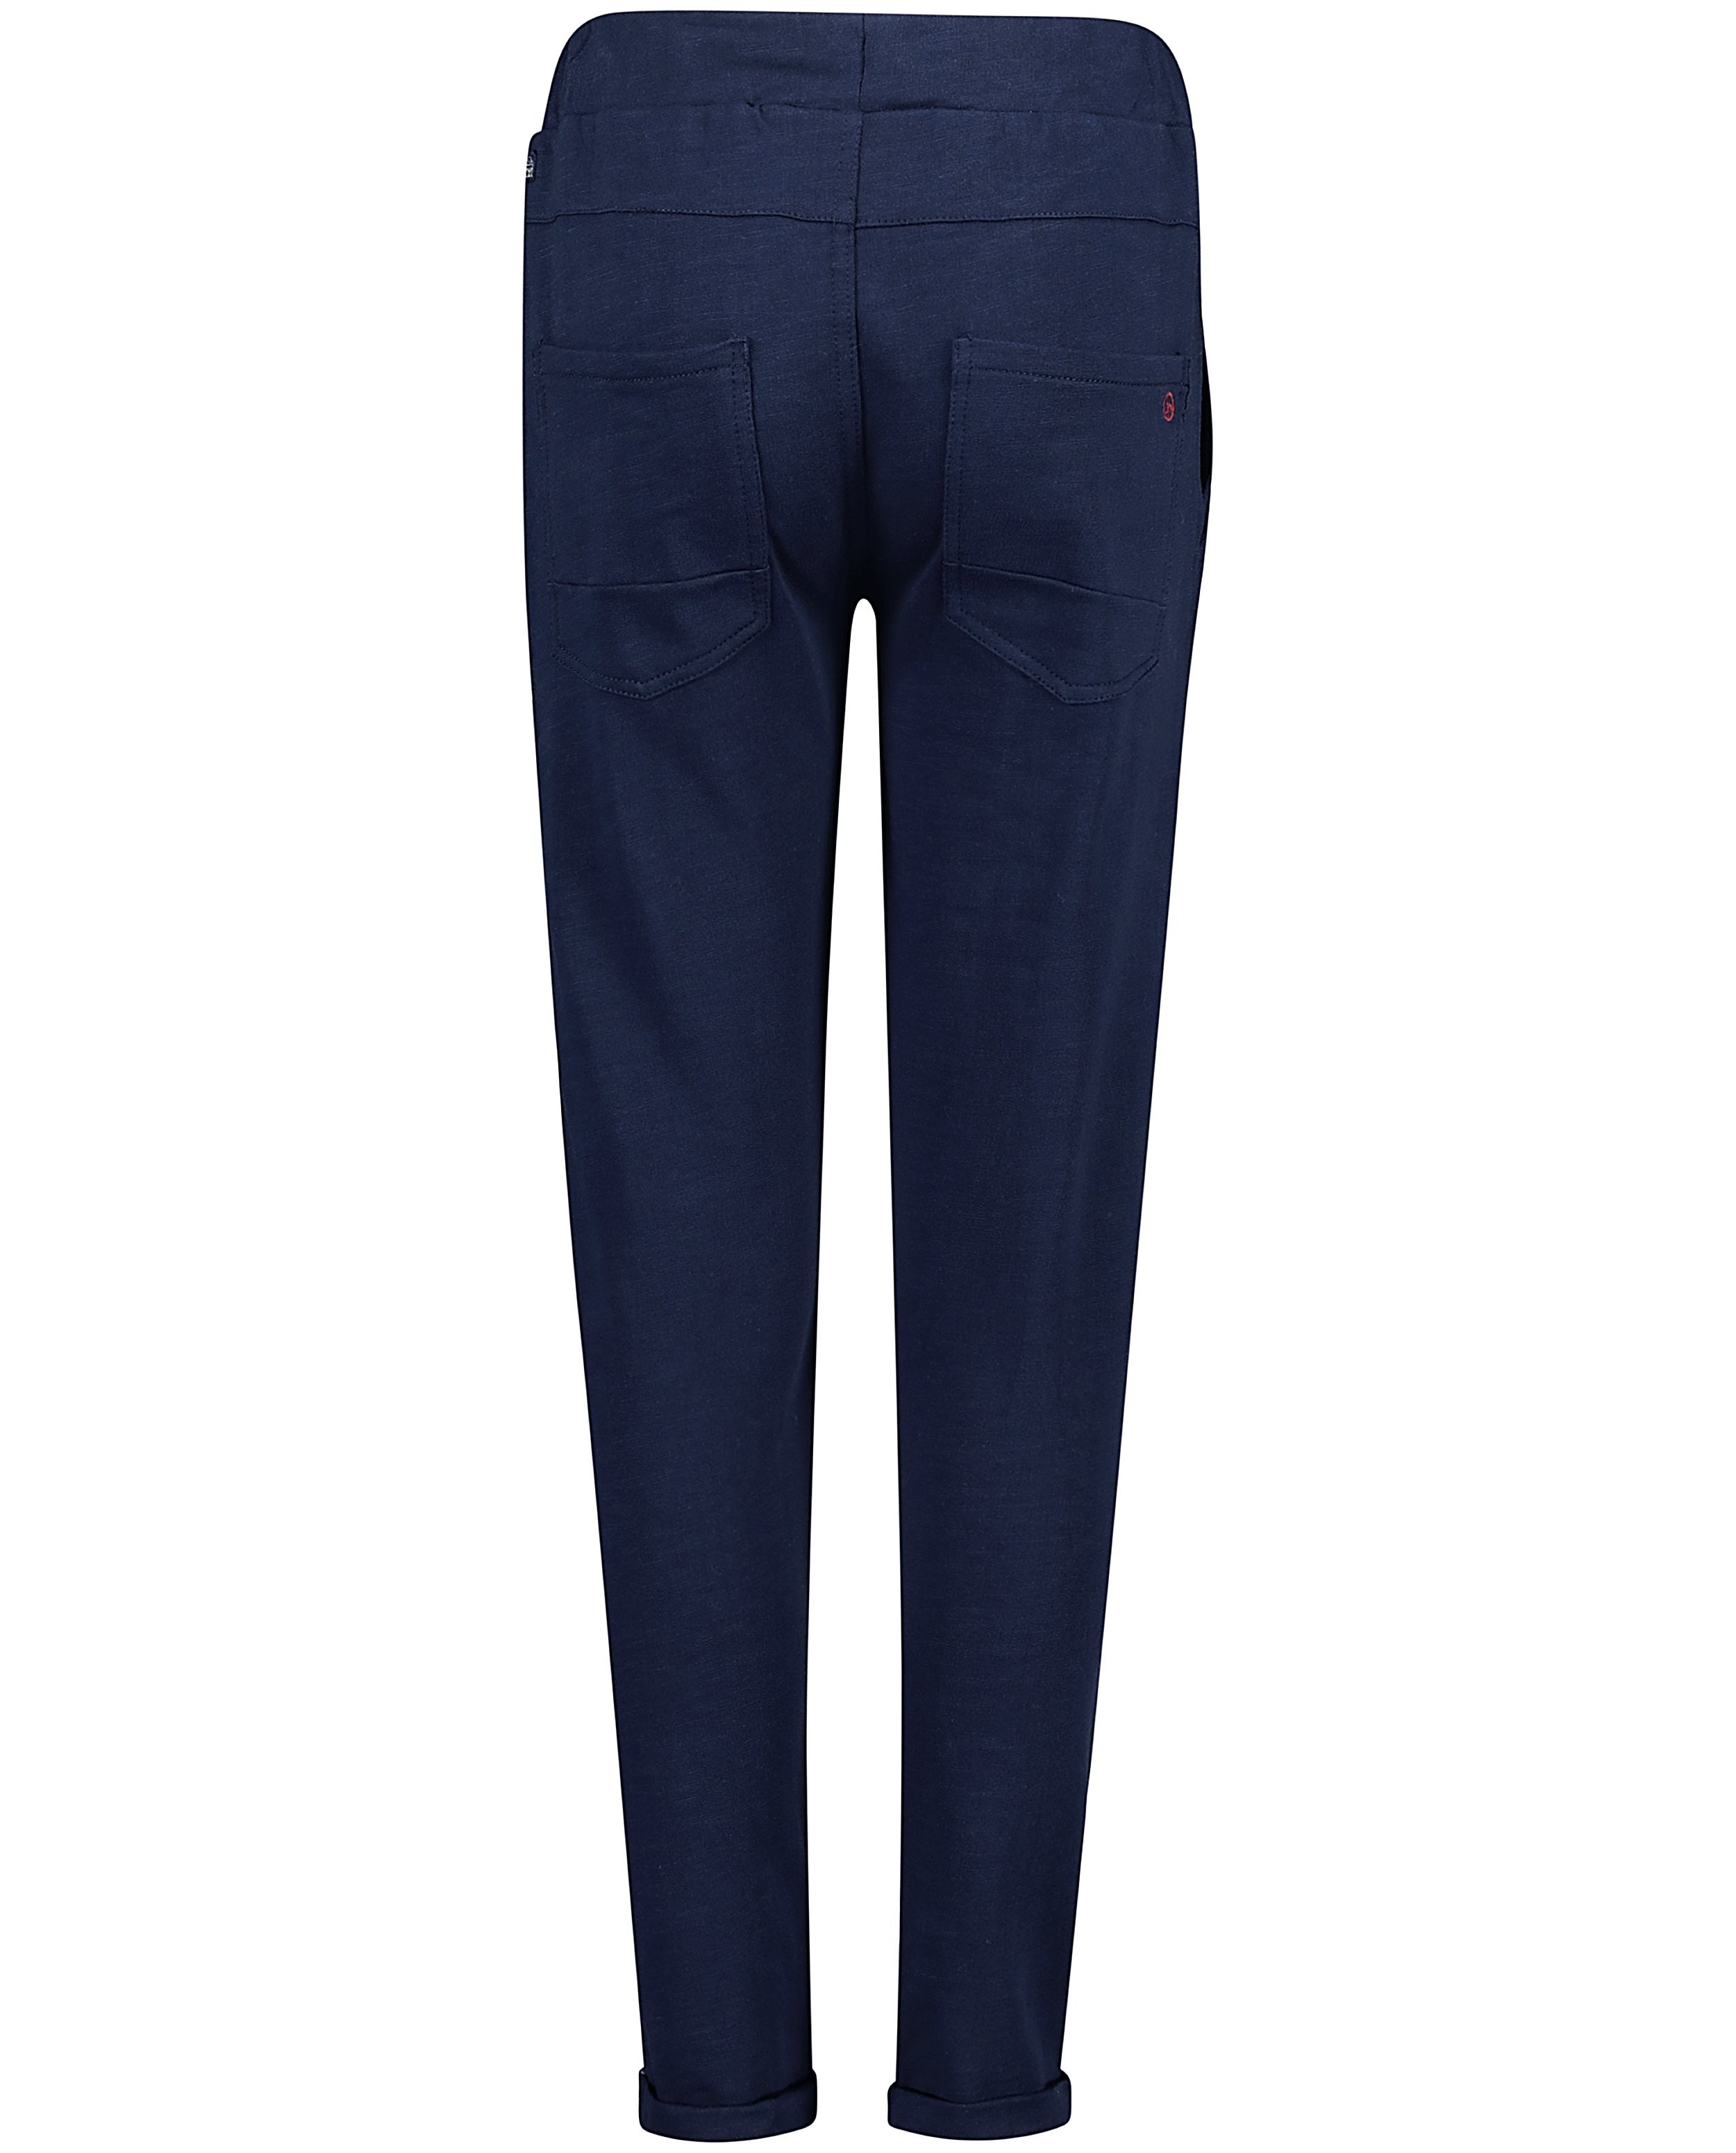 Pantalons - Pantalon molletonné bleu Nachtwacht